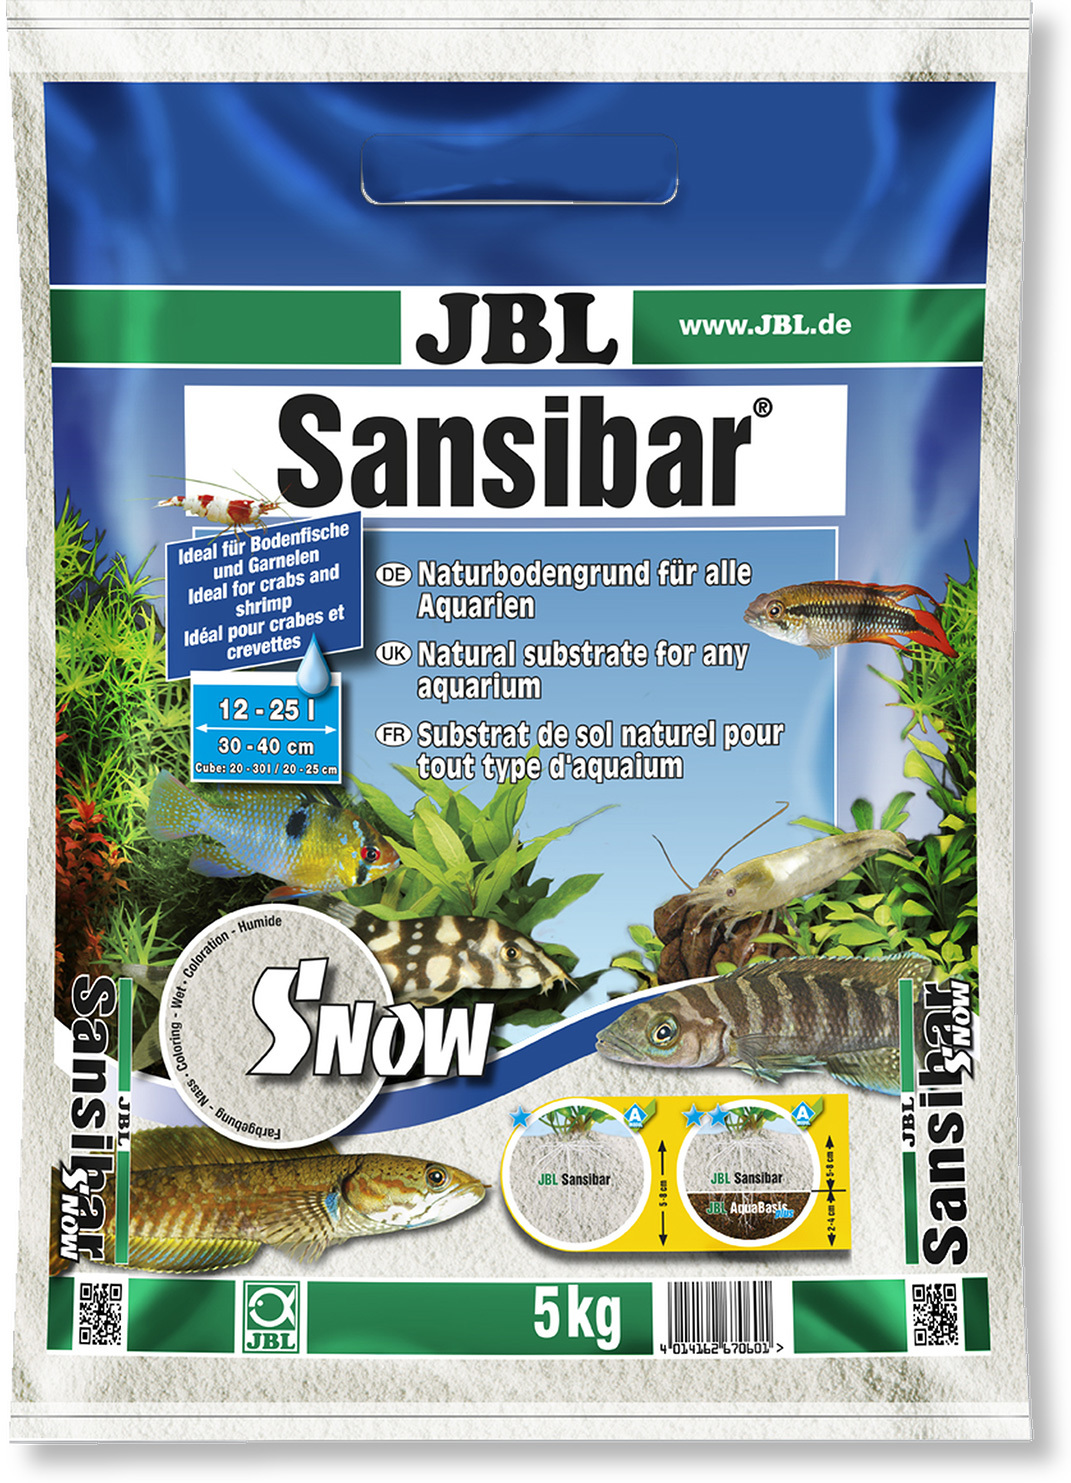 JBL Sansibar (snow) substrat alb-zapada